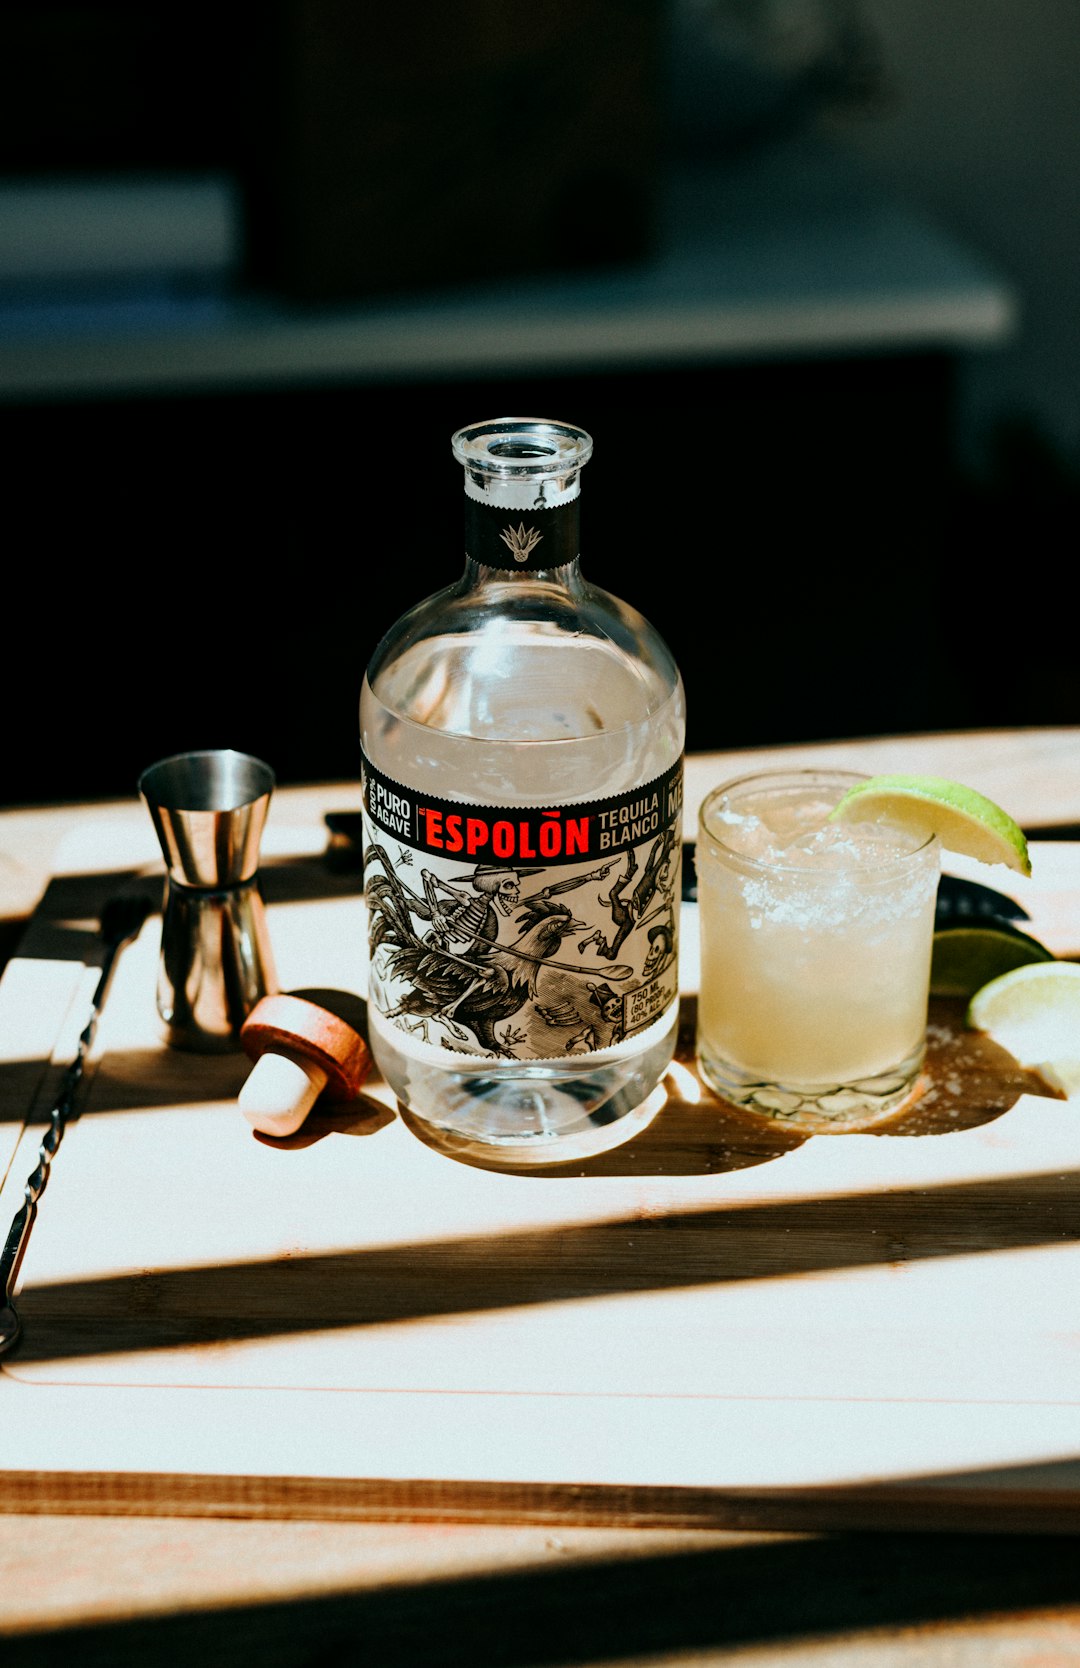 Espolòn Tequila bottle next to cocktail